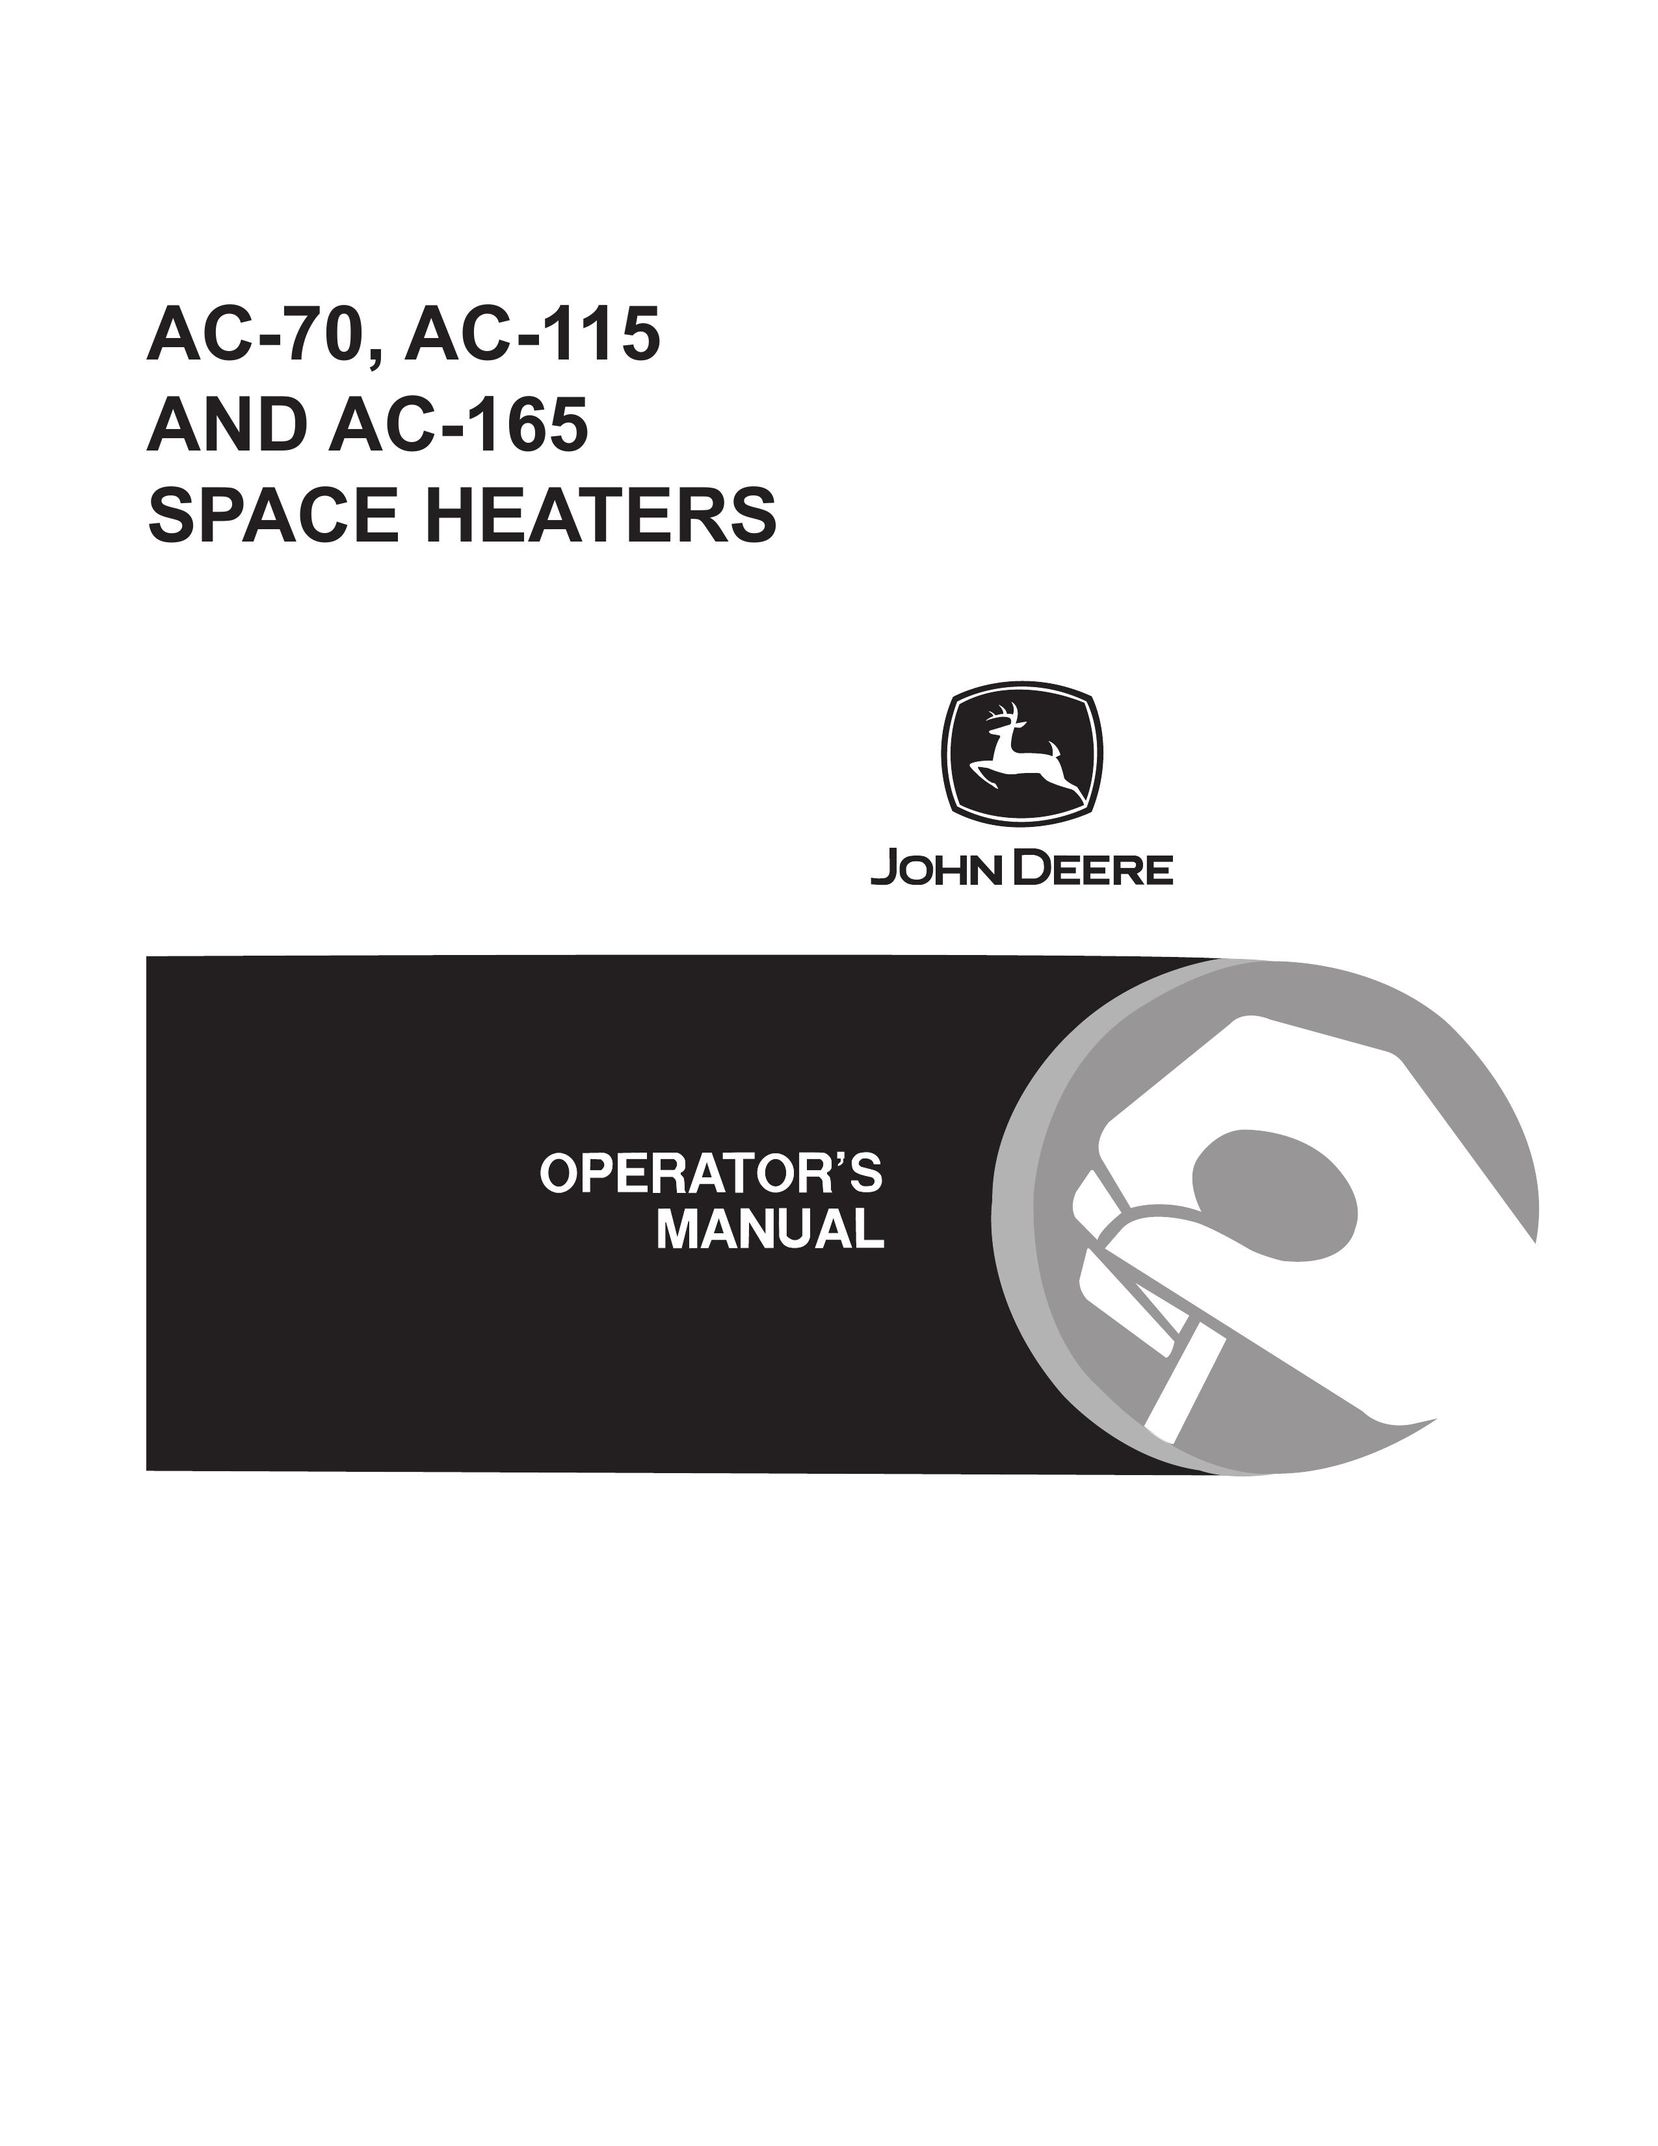 John Deere AC-70 Electric Heater User Manual